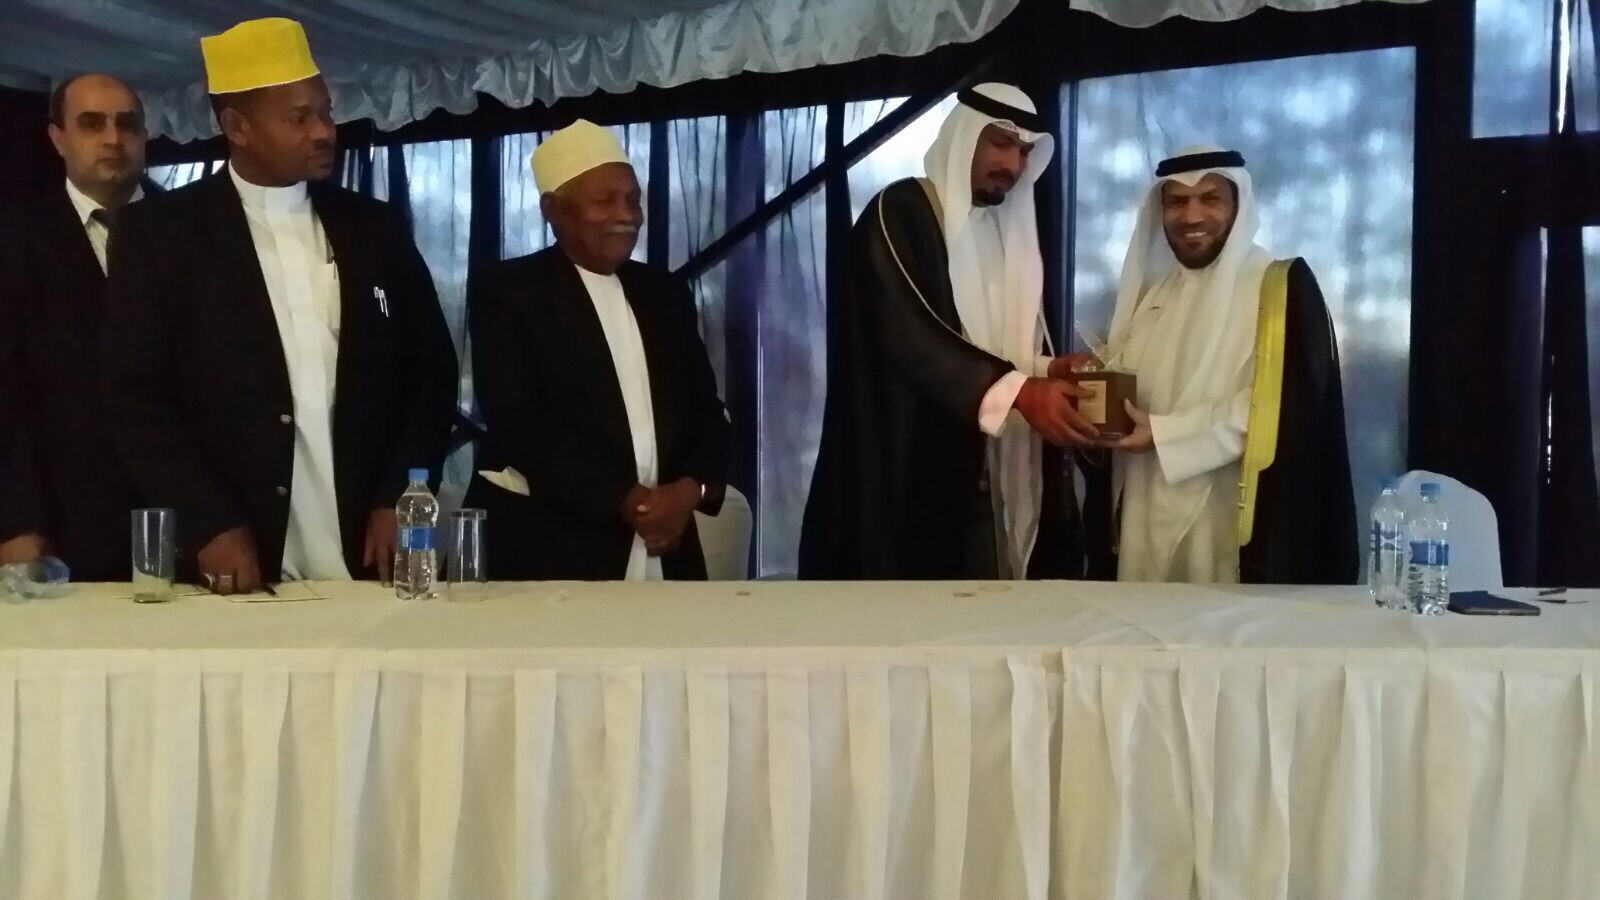 Kuwaiti Ambassador in Tanzania Jassem Al-Najem along with local officials honor a group of Quran memorization contestants